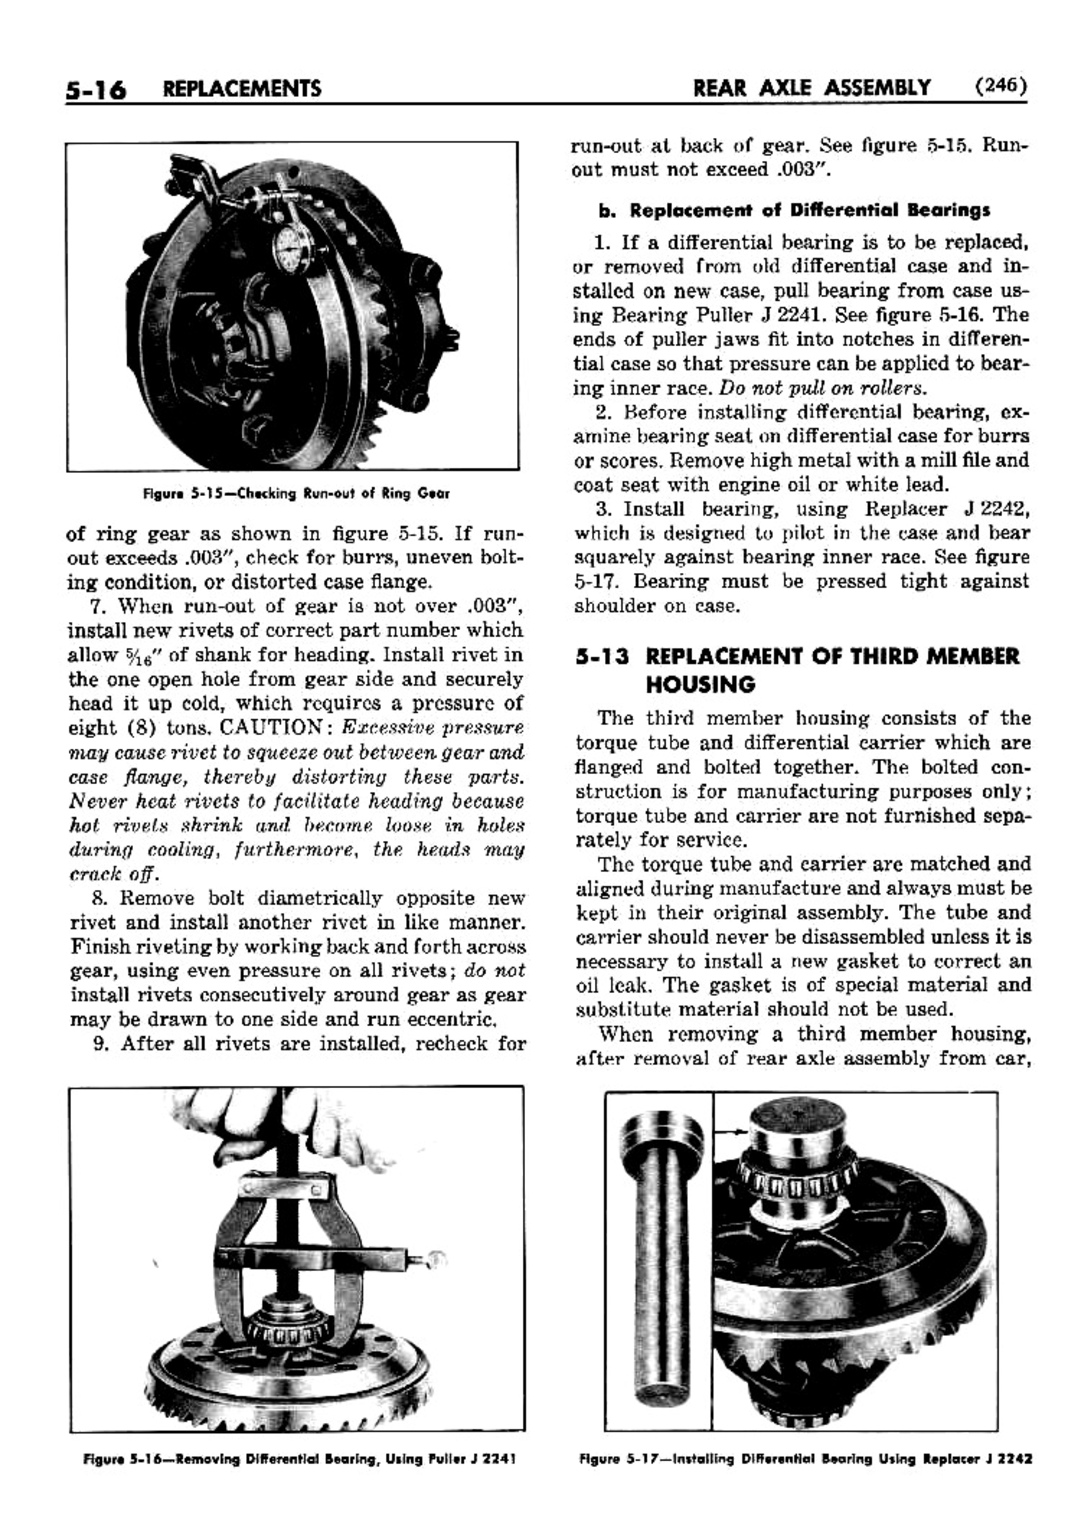 n_06 1952 Buick Shop Manual - Rear Axle-016-016.jpg